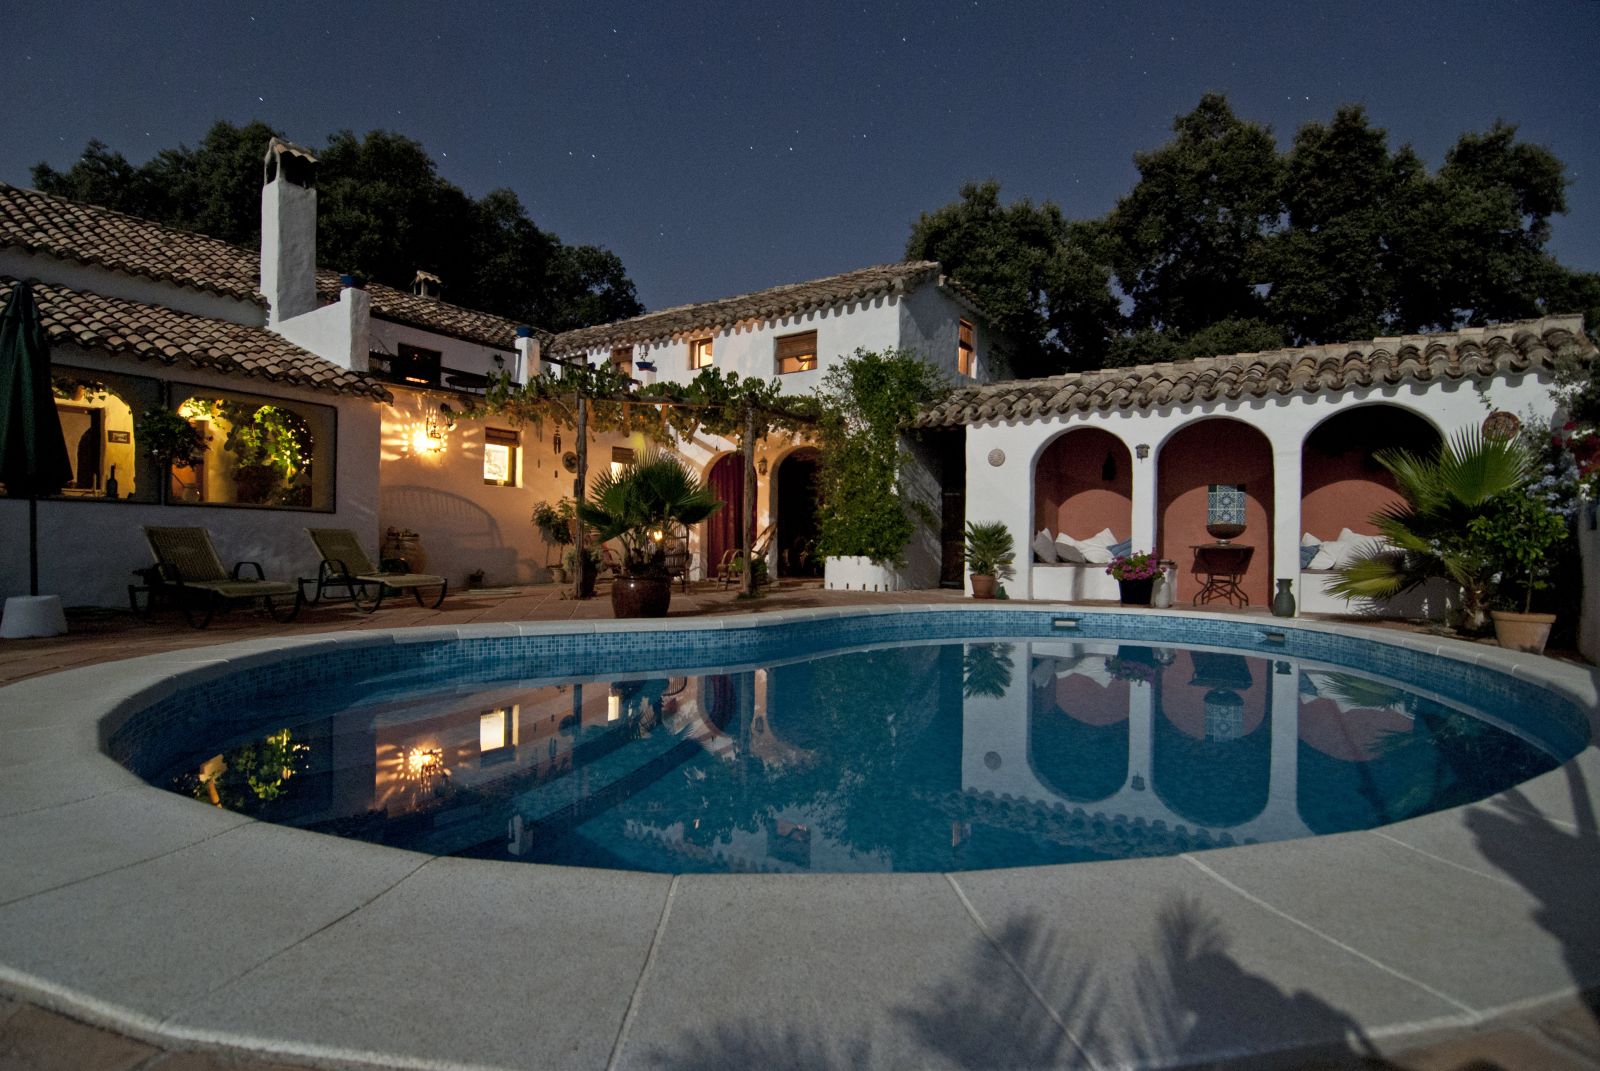 Immobilien auf Mallorca, hier Villa mit Pool